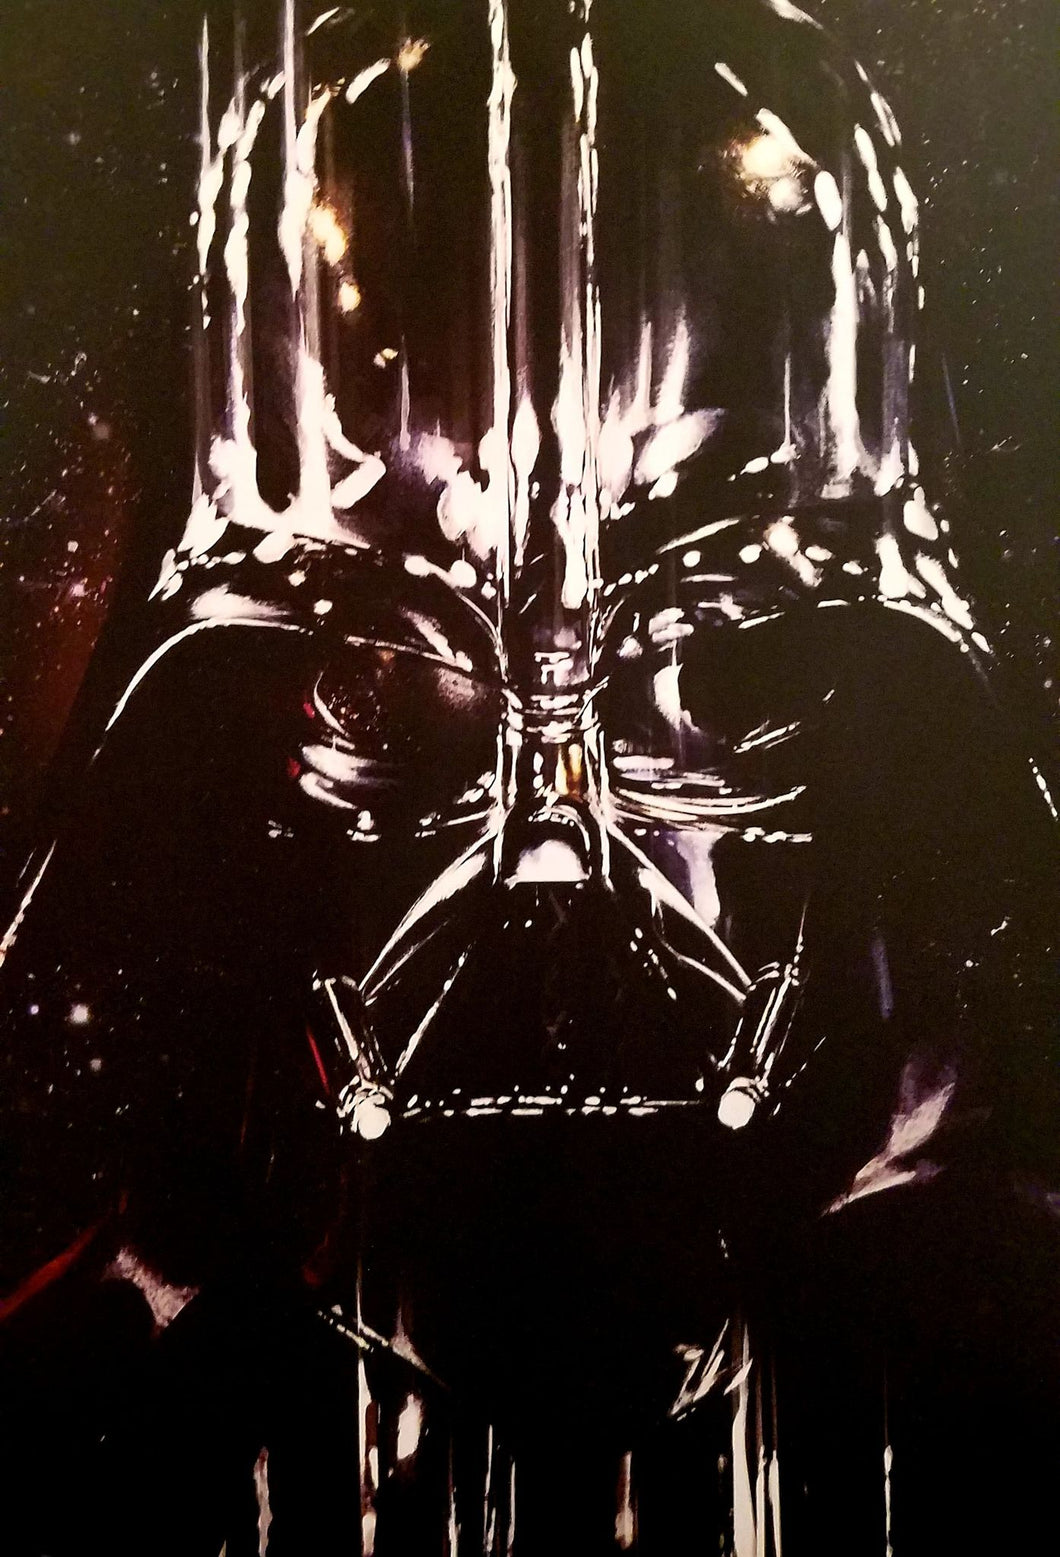 Star Wars Darth Vader by Mark Brooks 11x16 Art Poster Print Marvel Comics